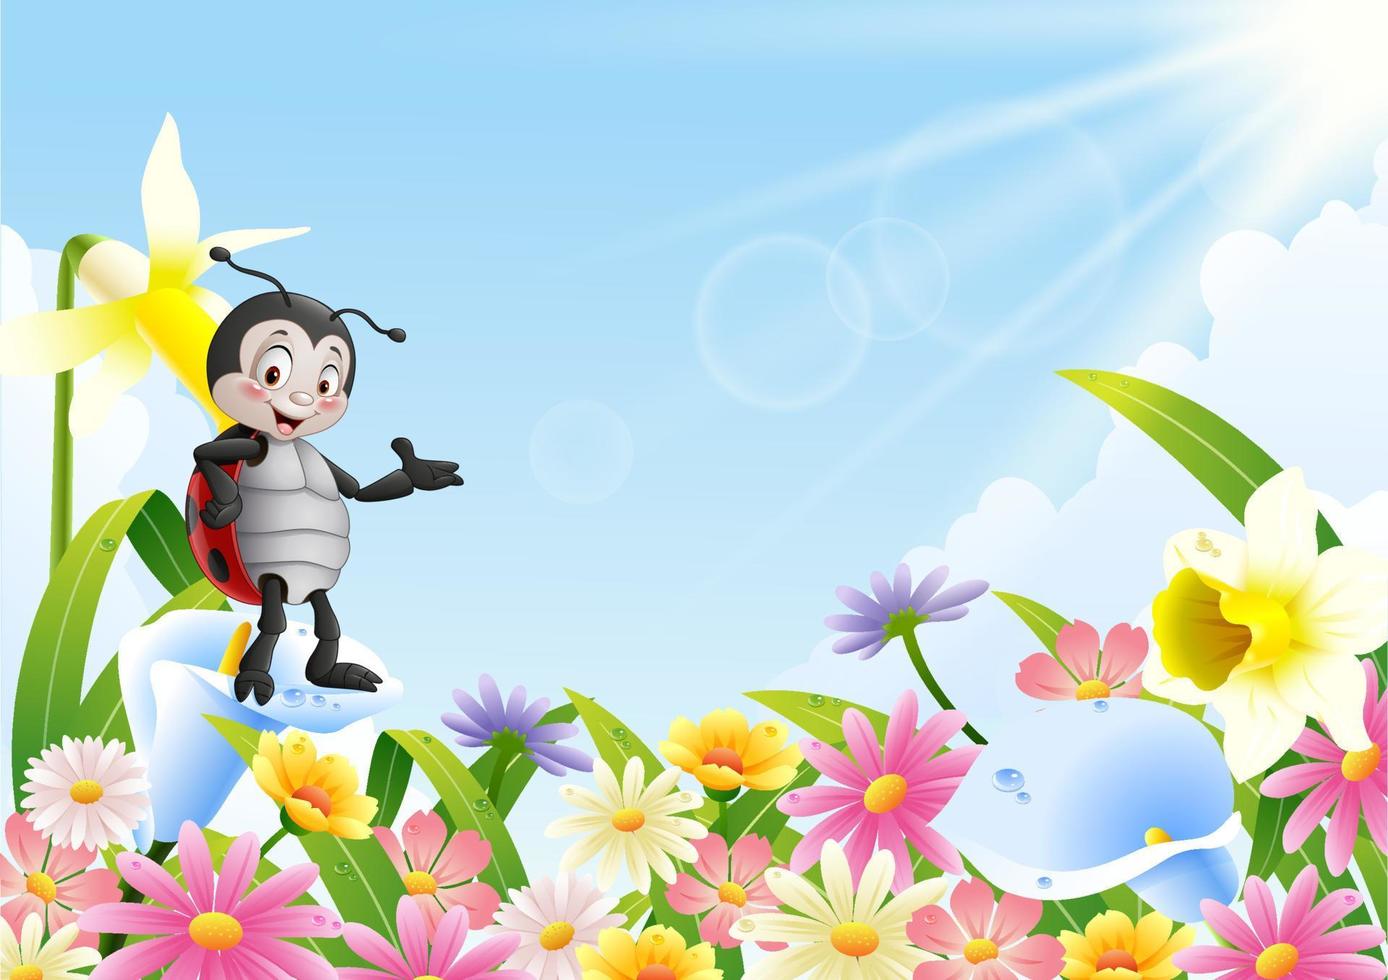 Cartoon ladybug in the flower field vector